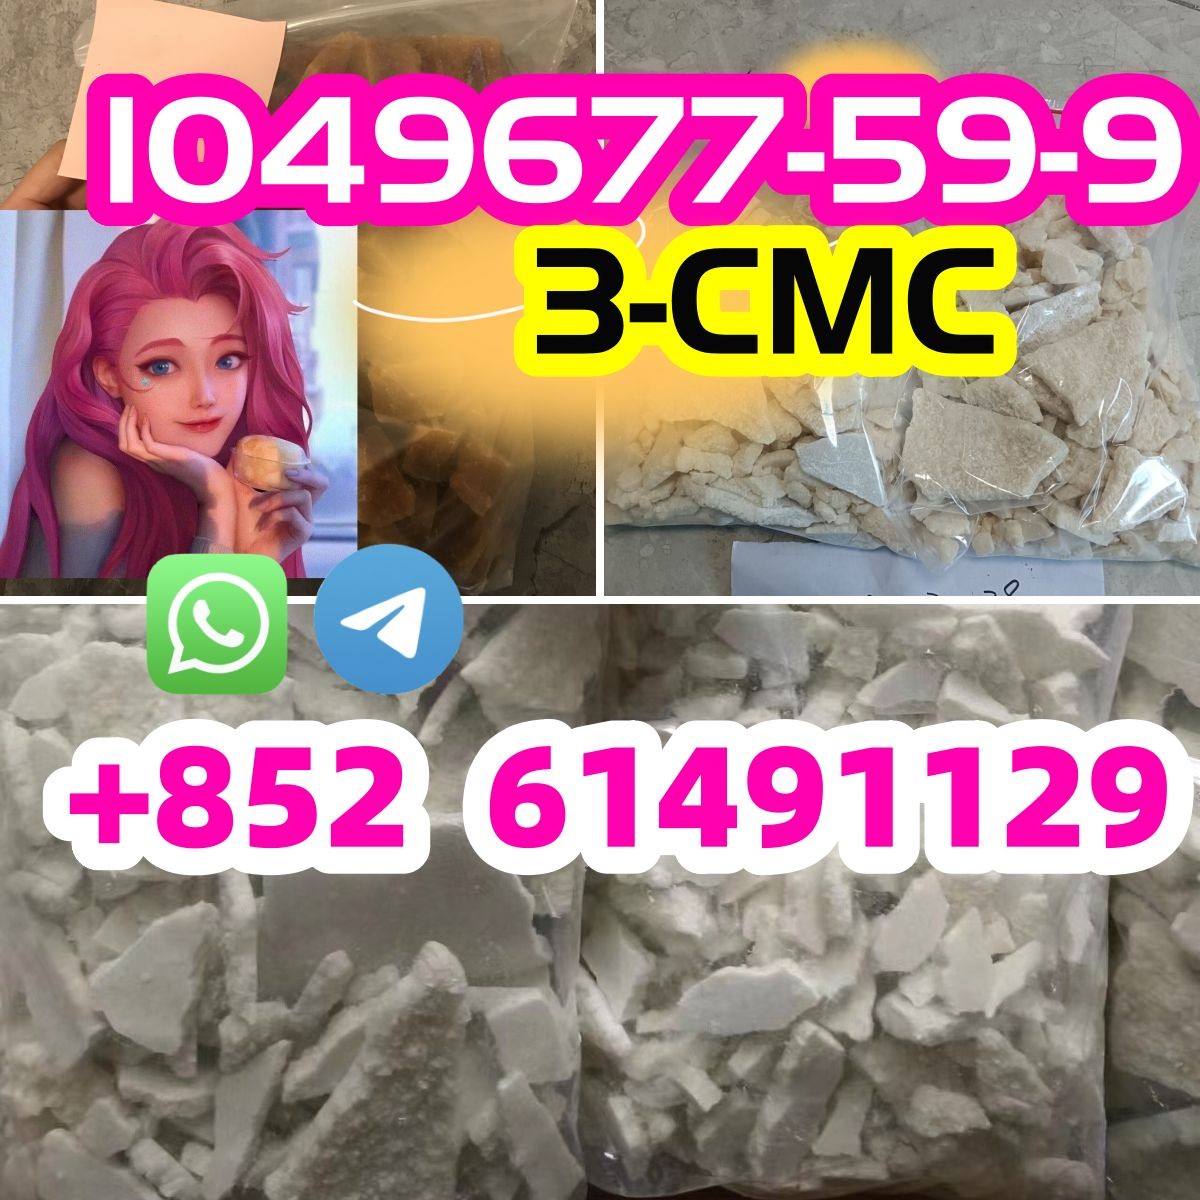 1049677-59-9 ,1607439-32-6,3-CMC,4CMC-pic_1